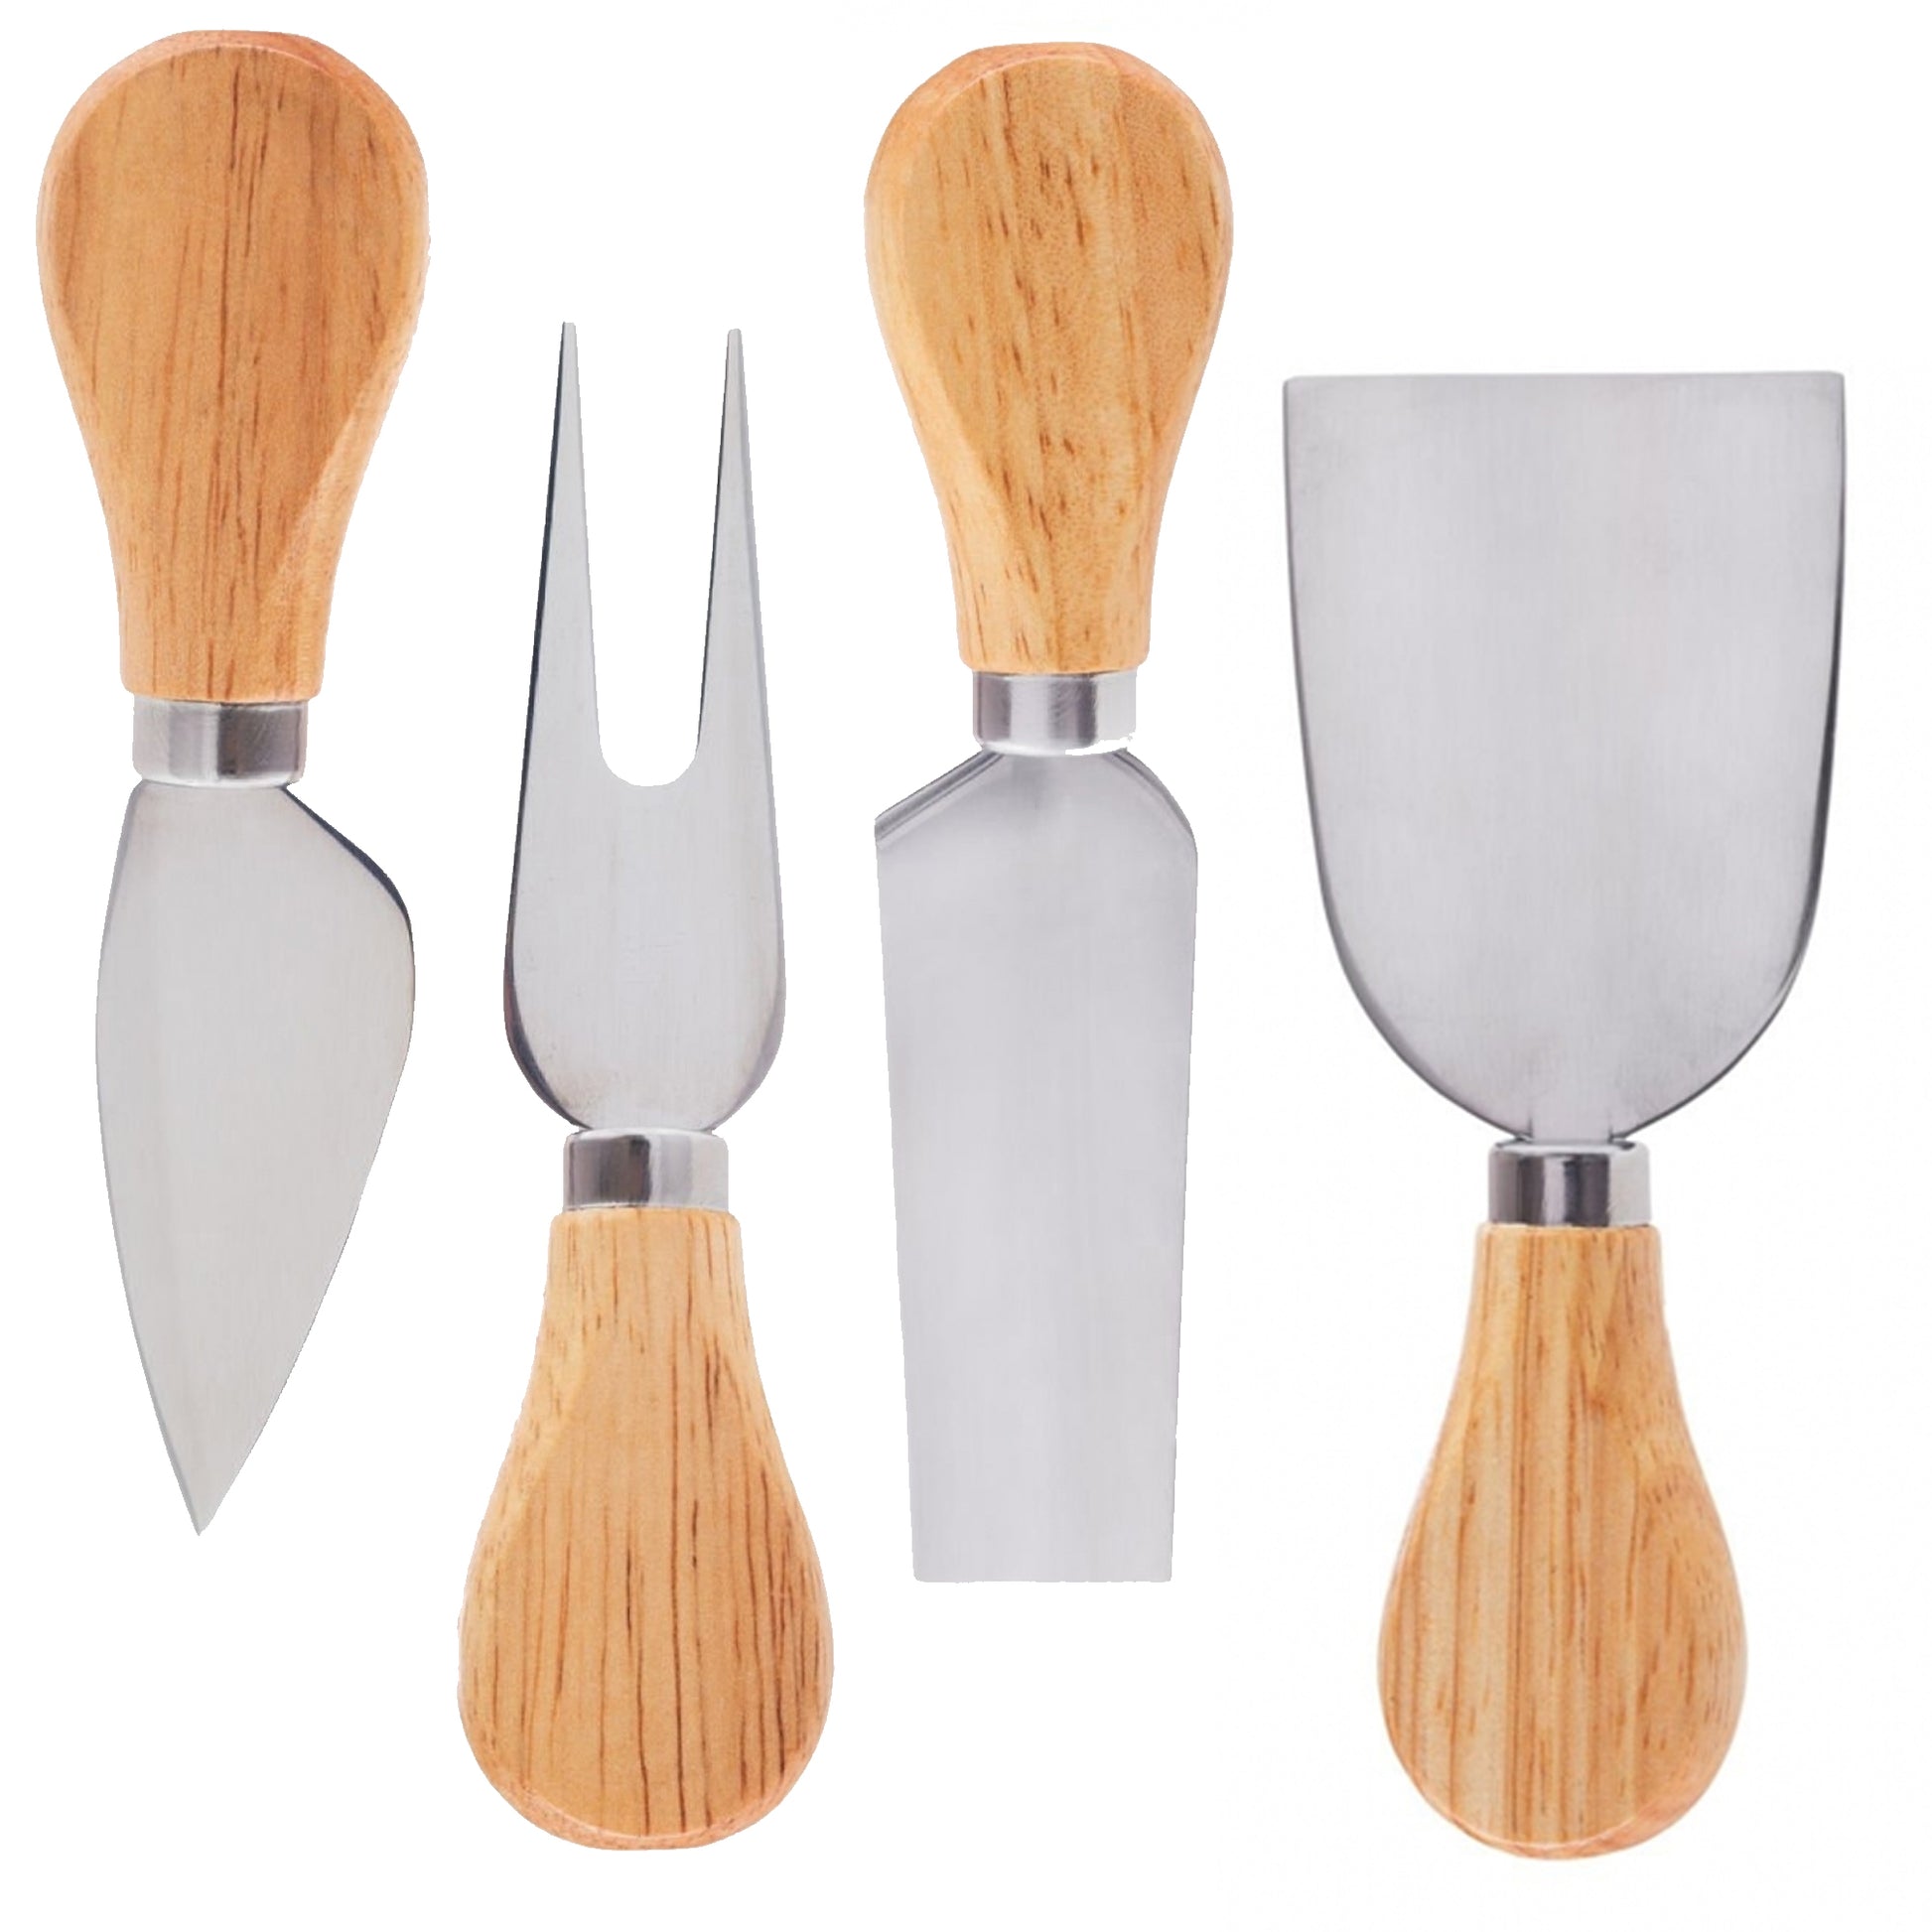 Lukata cheese knifes wood handle steel stainless sharp